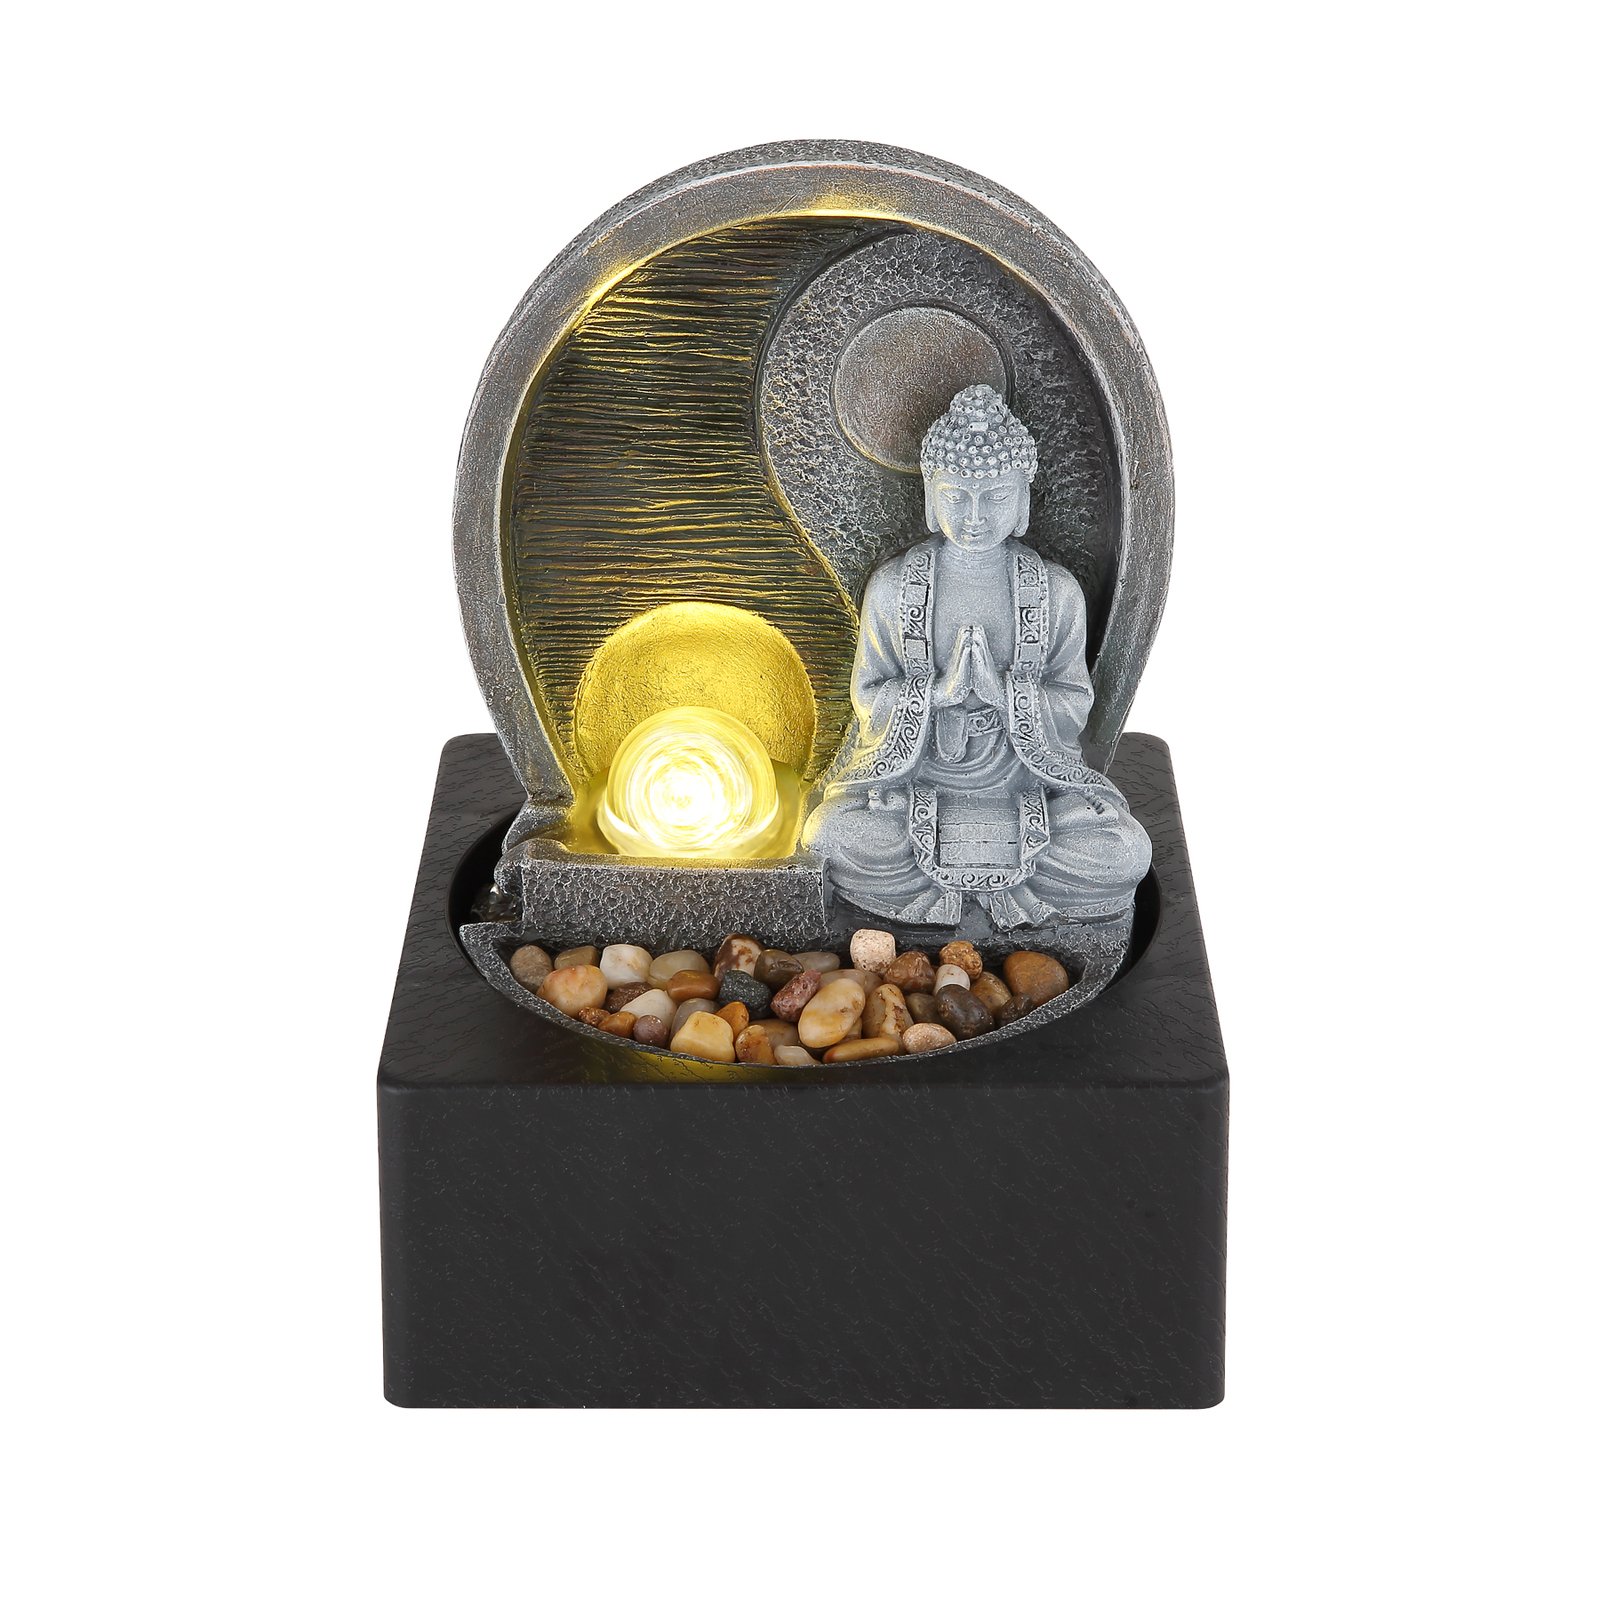 LED-Zimmerbrunnen Fontana, anthrazit/grau, Buddha